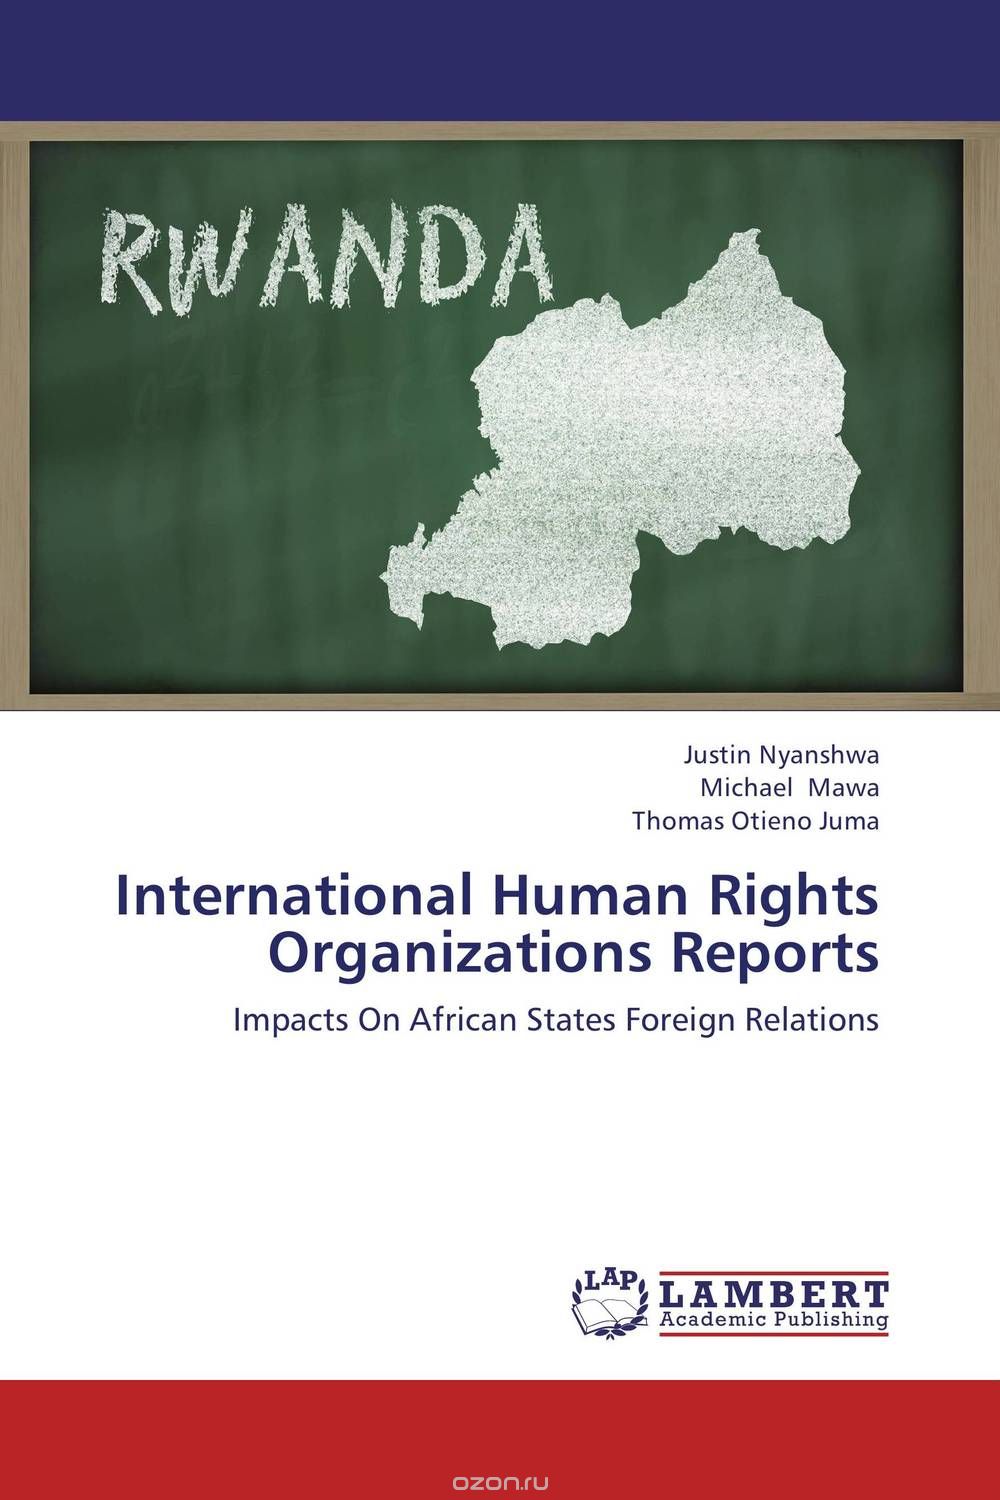 Скачать книгу "International Human Rights Organizations Reports"